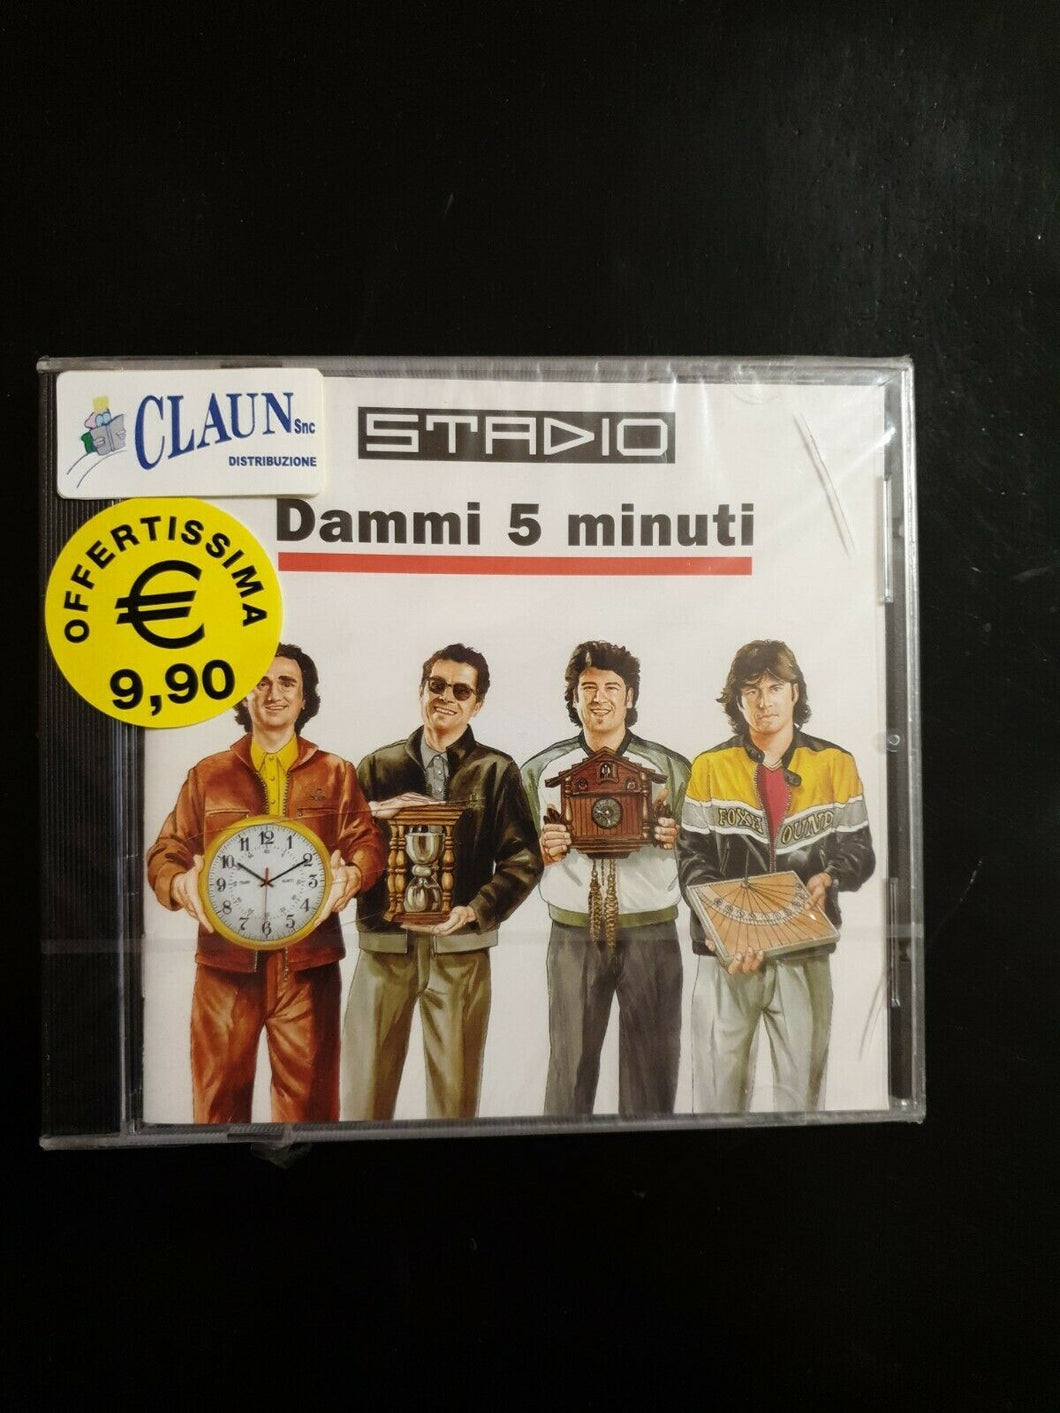 STADIO - DAMMI 5 MINUTI CD Nuovo